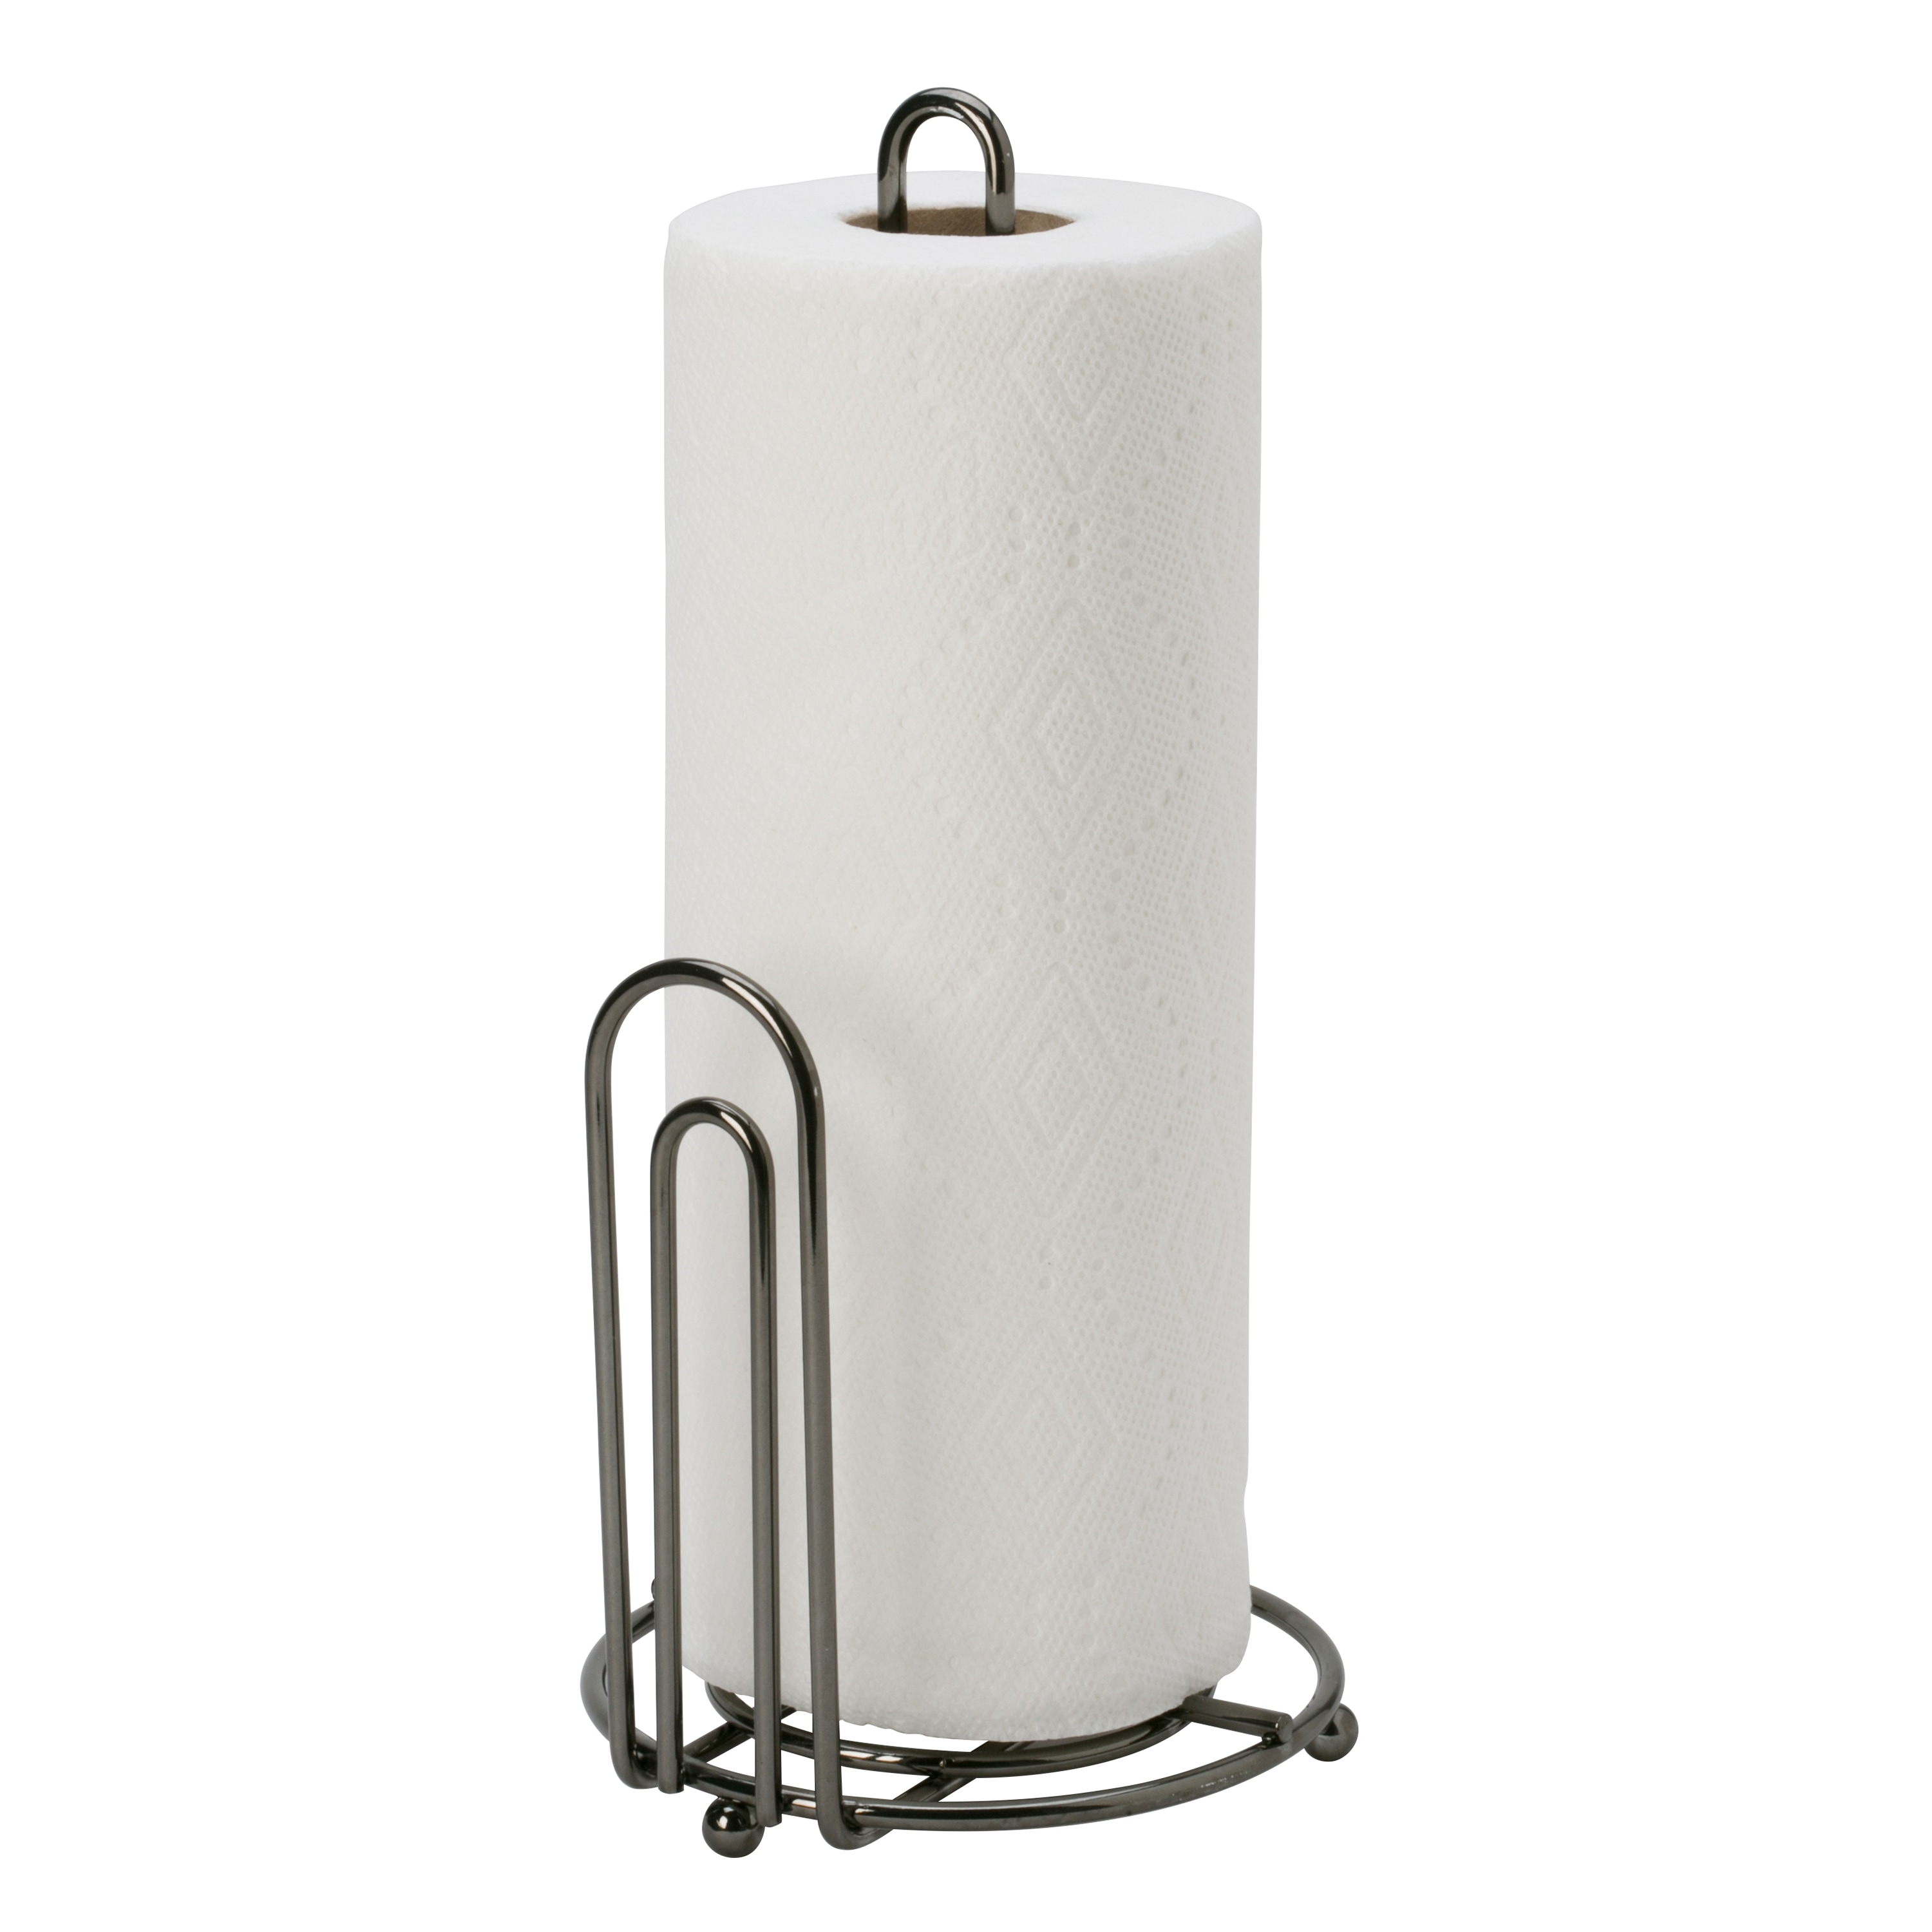 SMARTAKE Paper Towel Holder, Standing Kitchen Roll Holder with